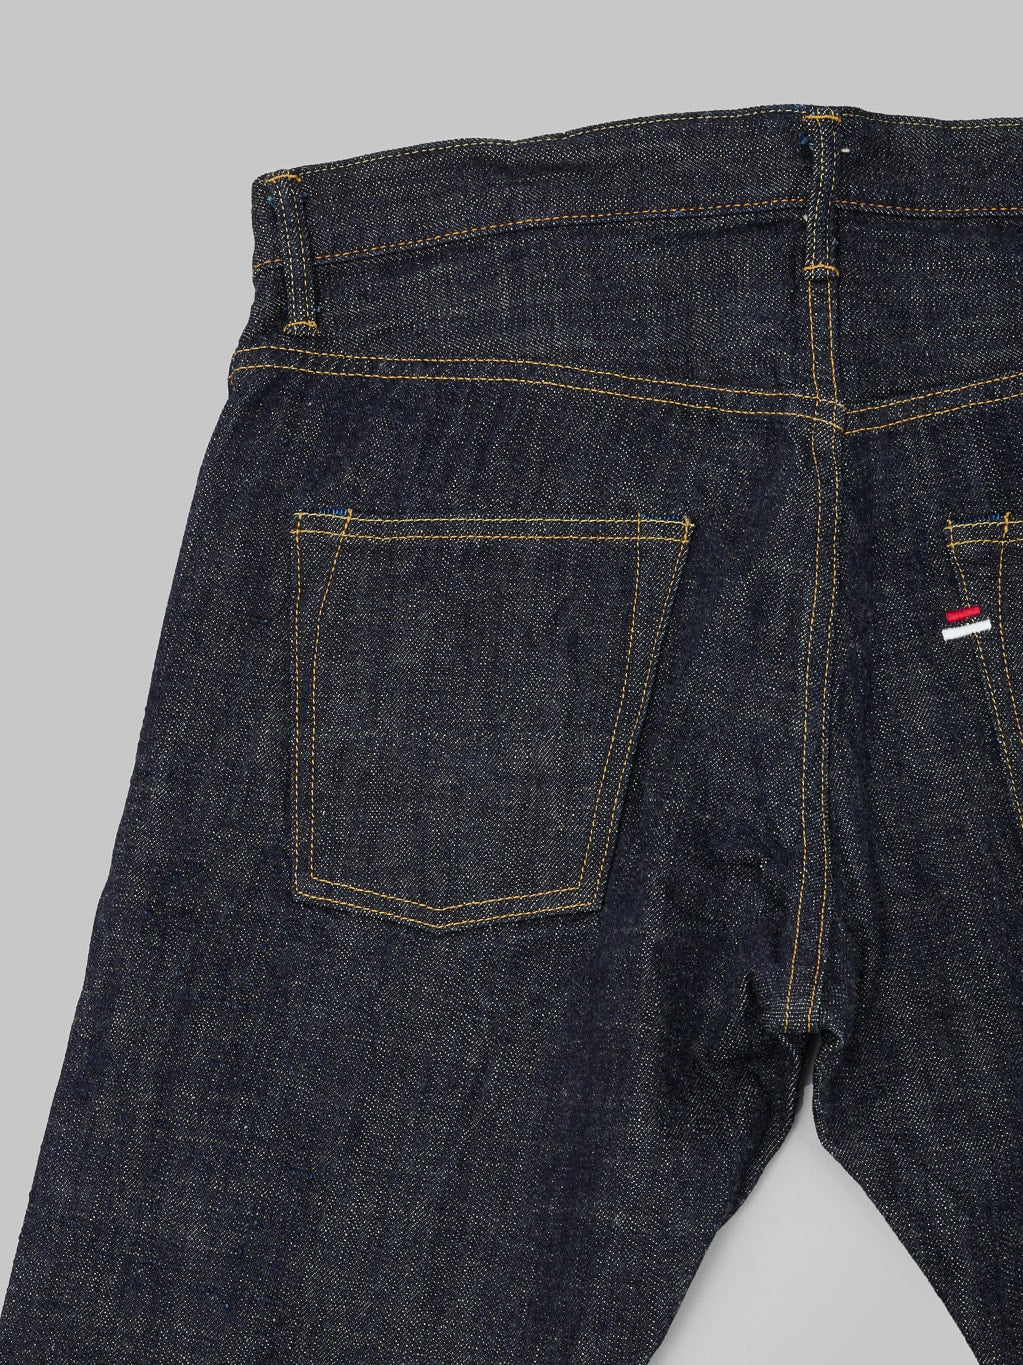 Tanuki Zetto Benkei High Tapered Jeans reinforced back pockets